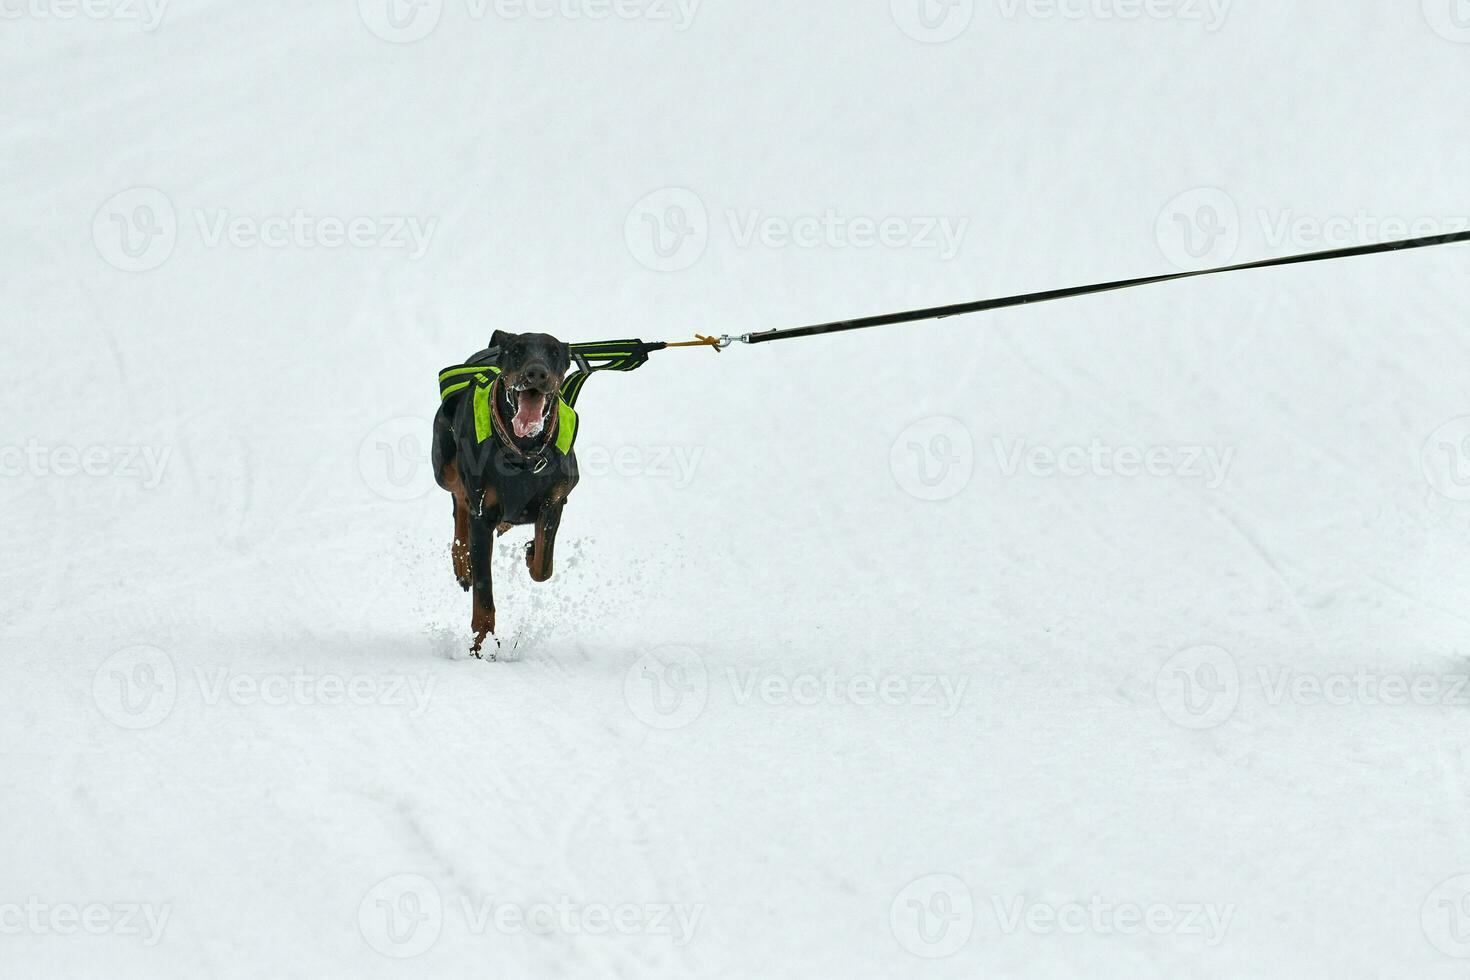 Running Doberman dog on sled dog racing photo